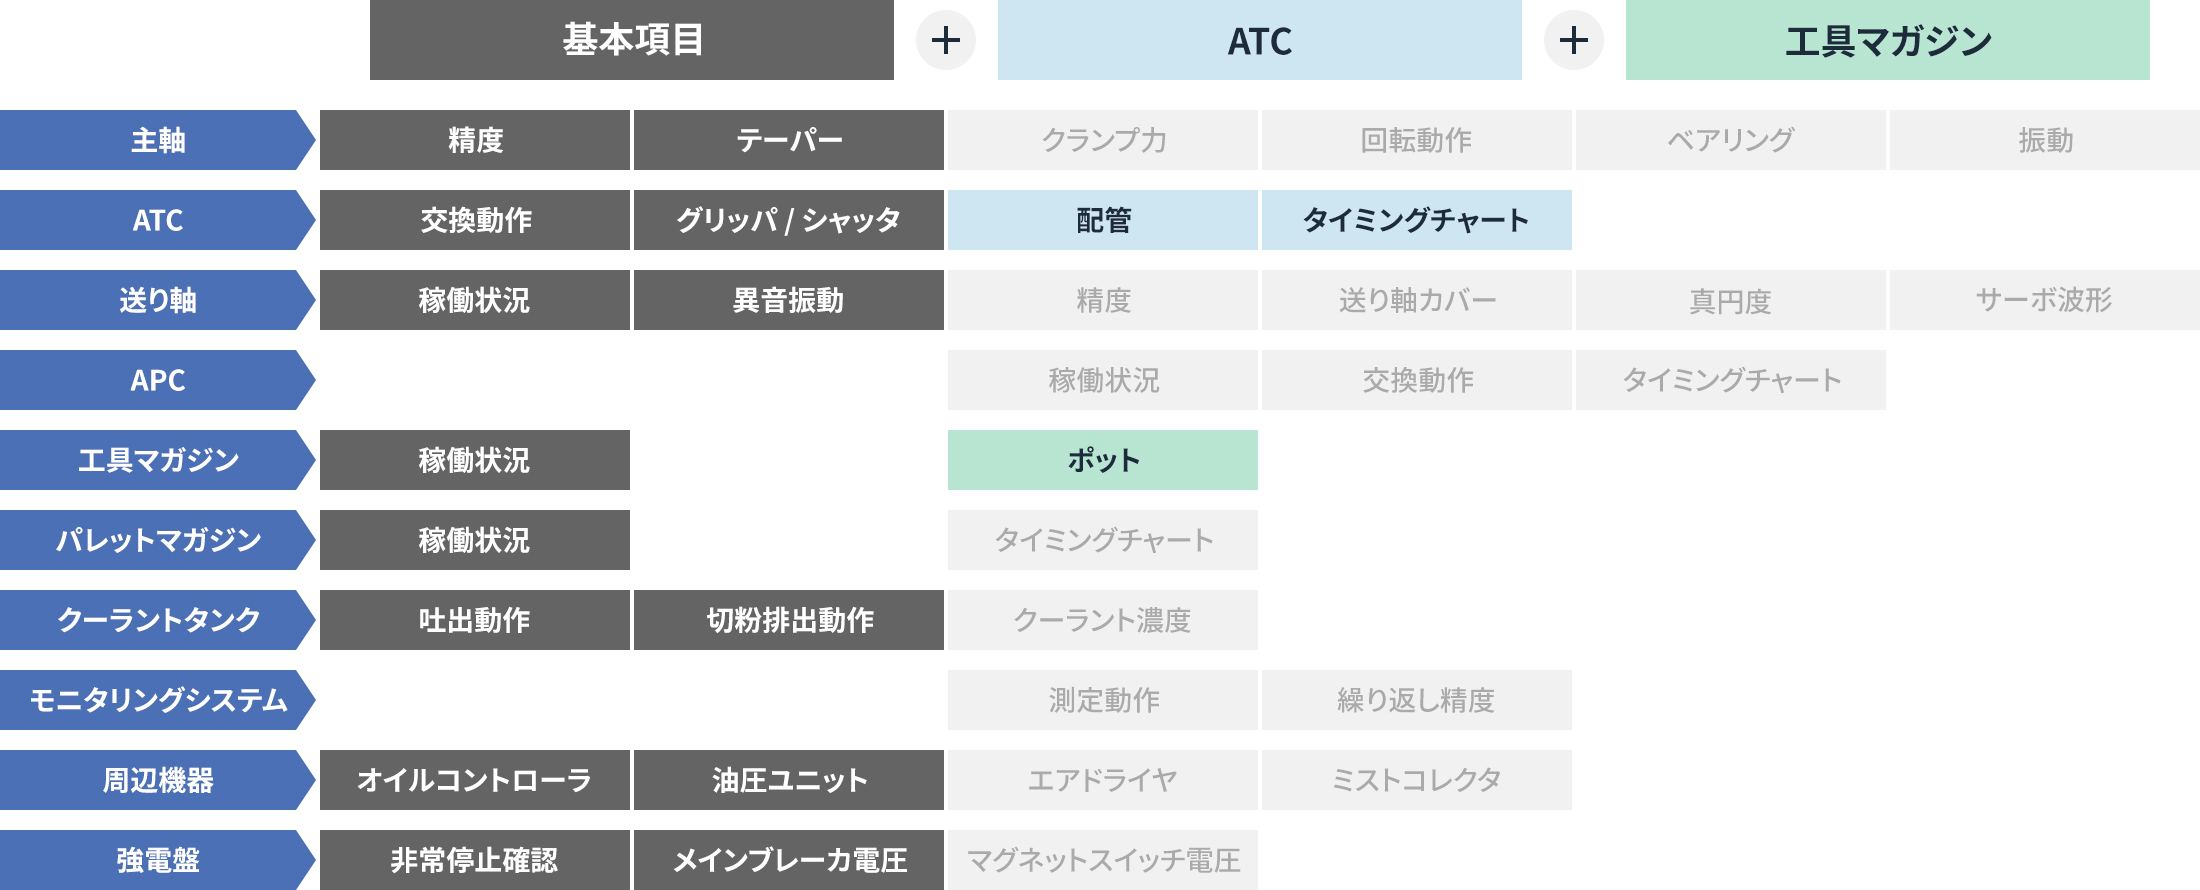 ATC重視表